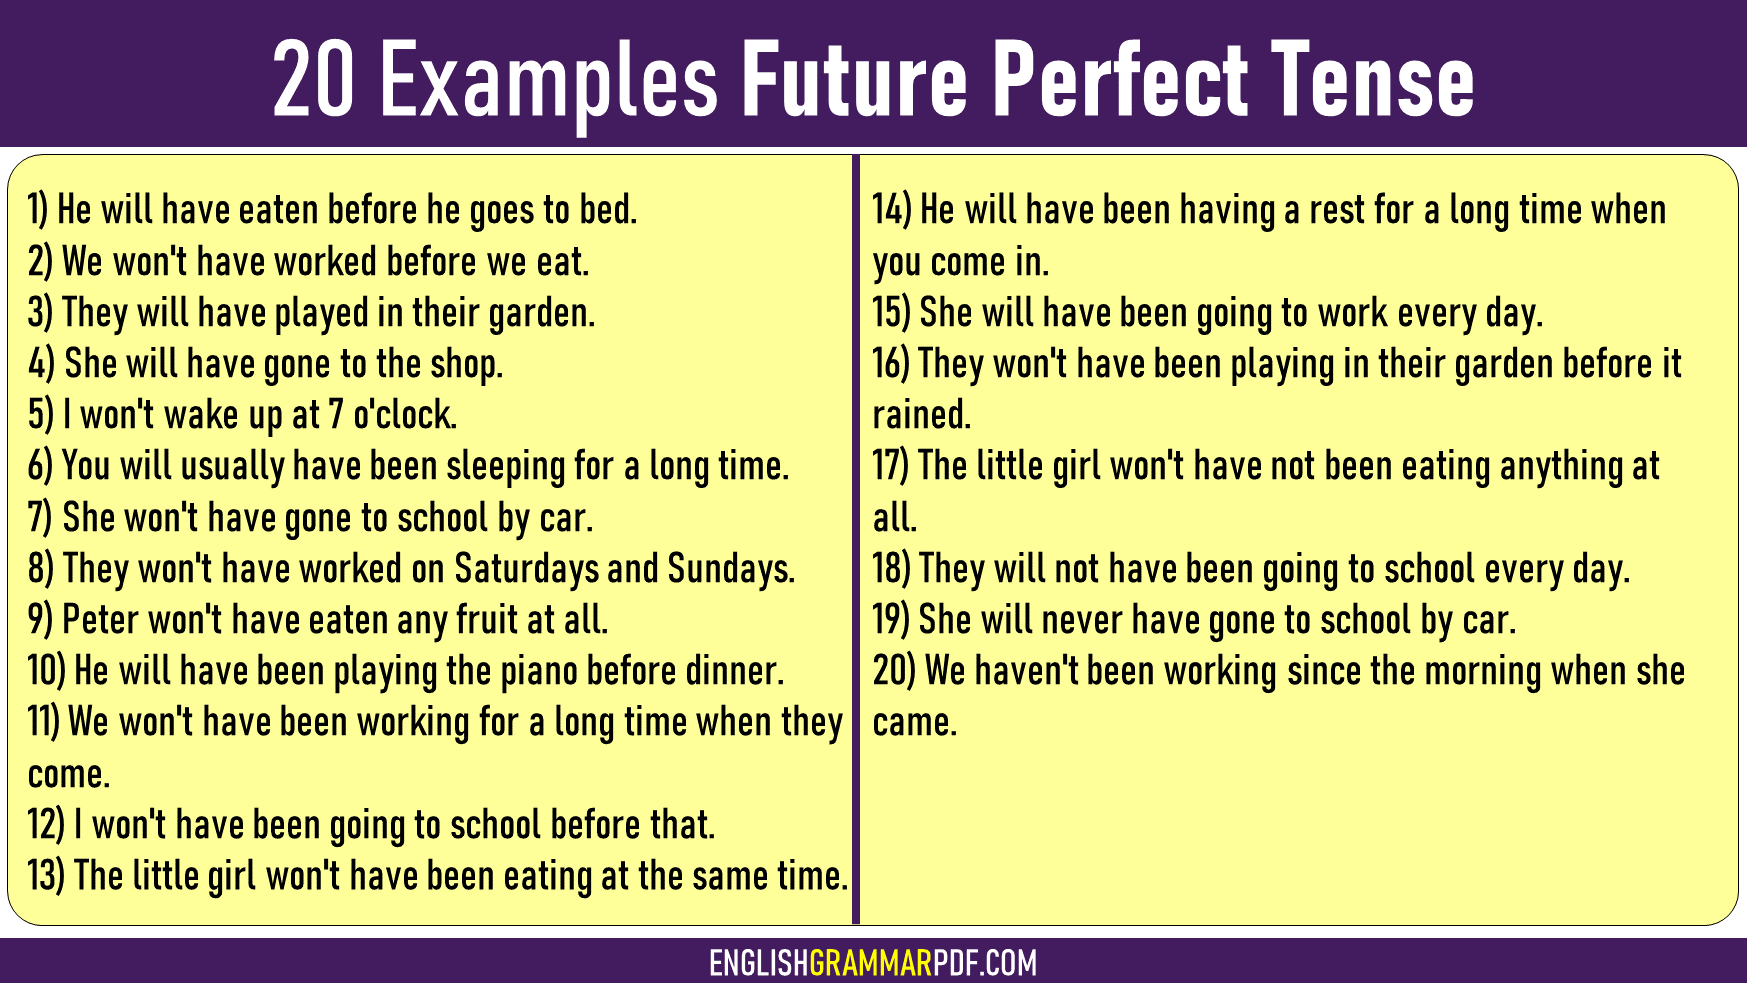 20-examples-of-future-perfect-tense-english-grammar-pdf